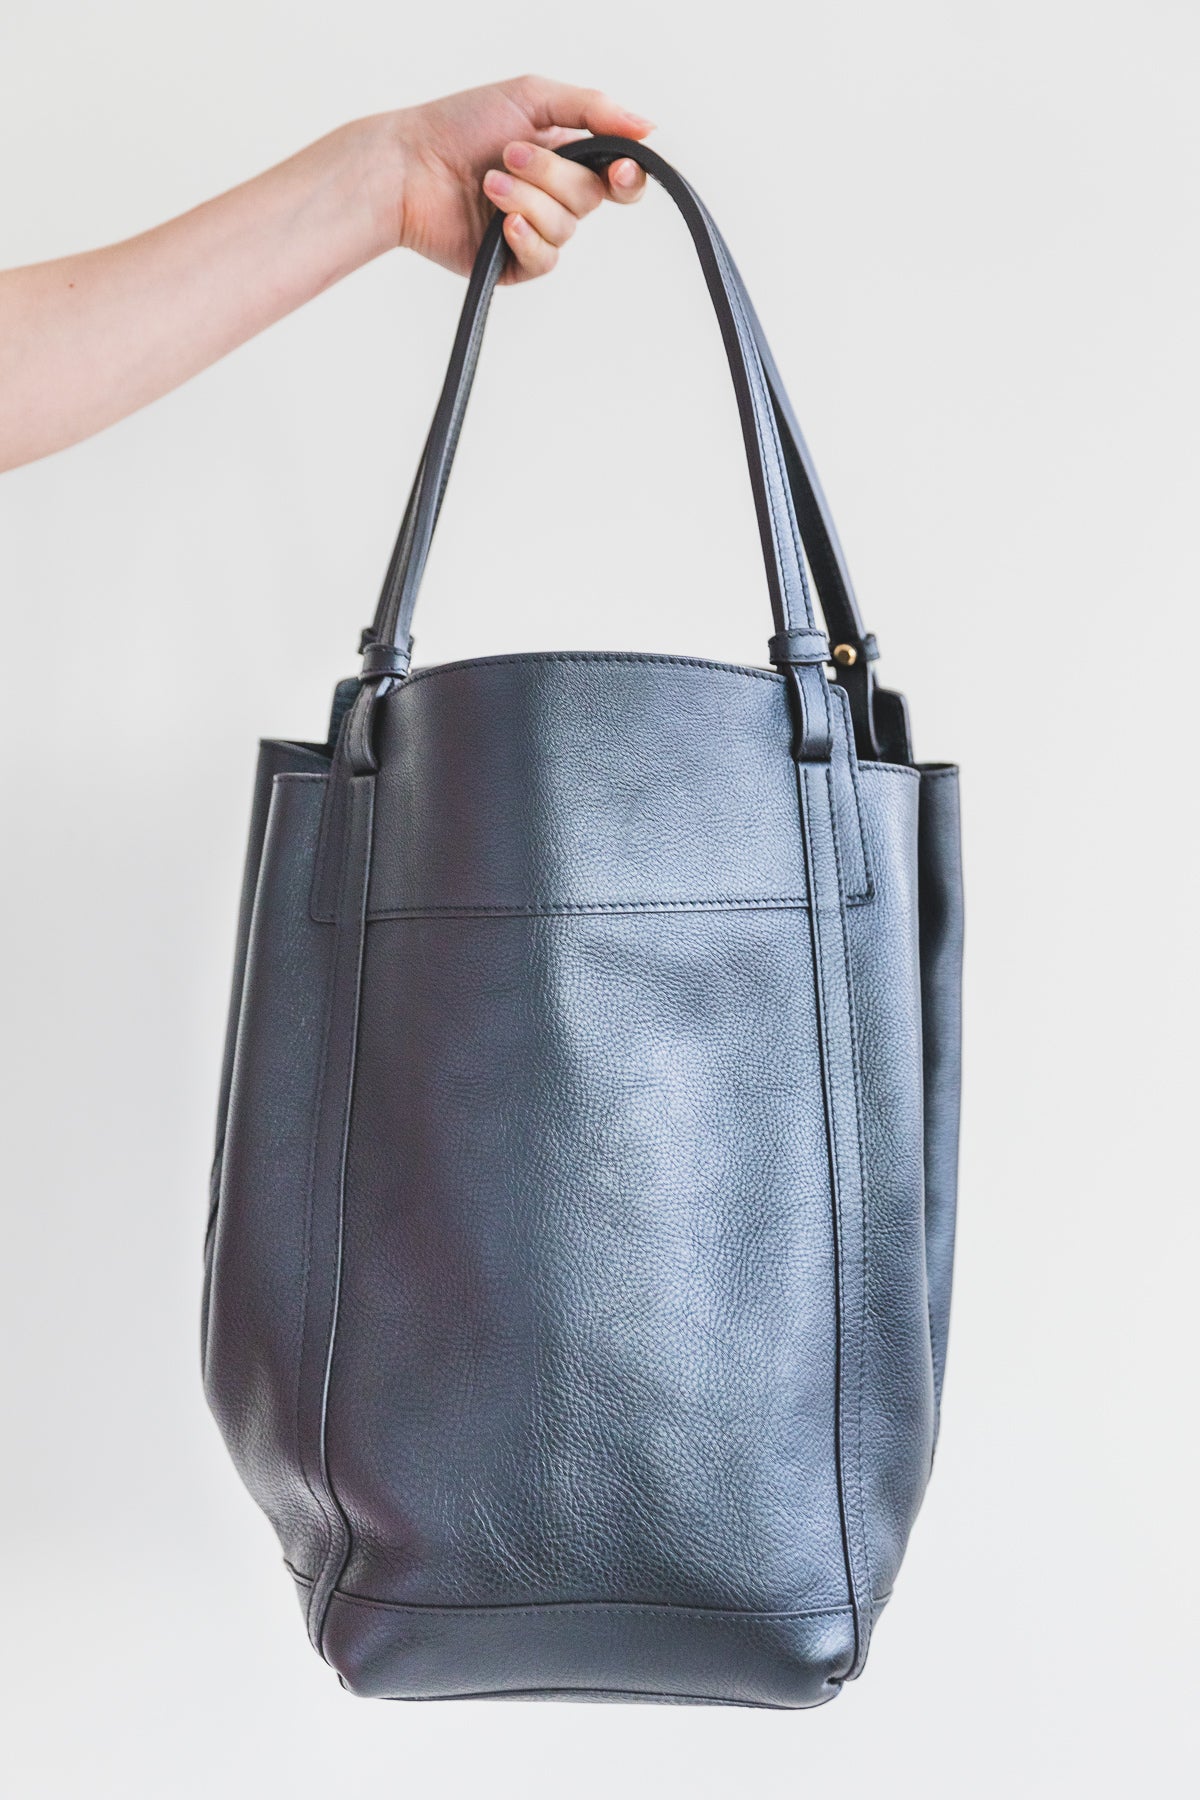 L black leather shopper bag